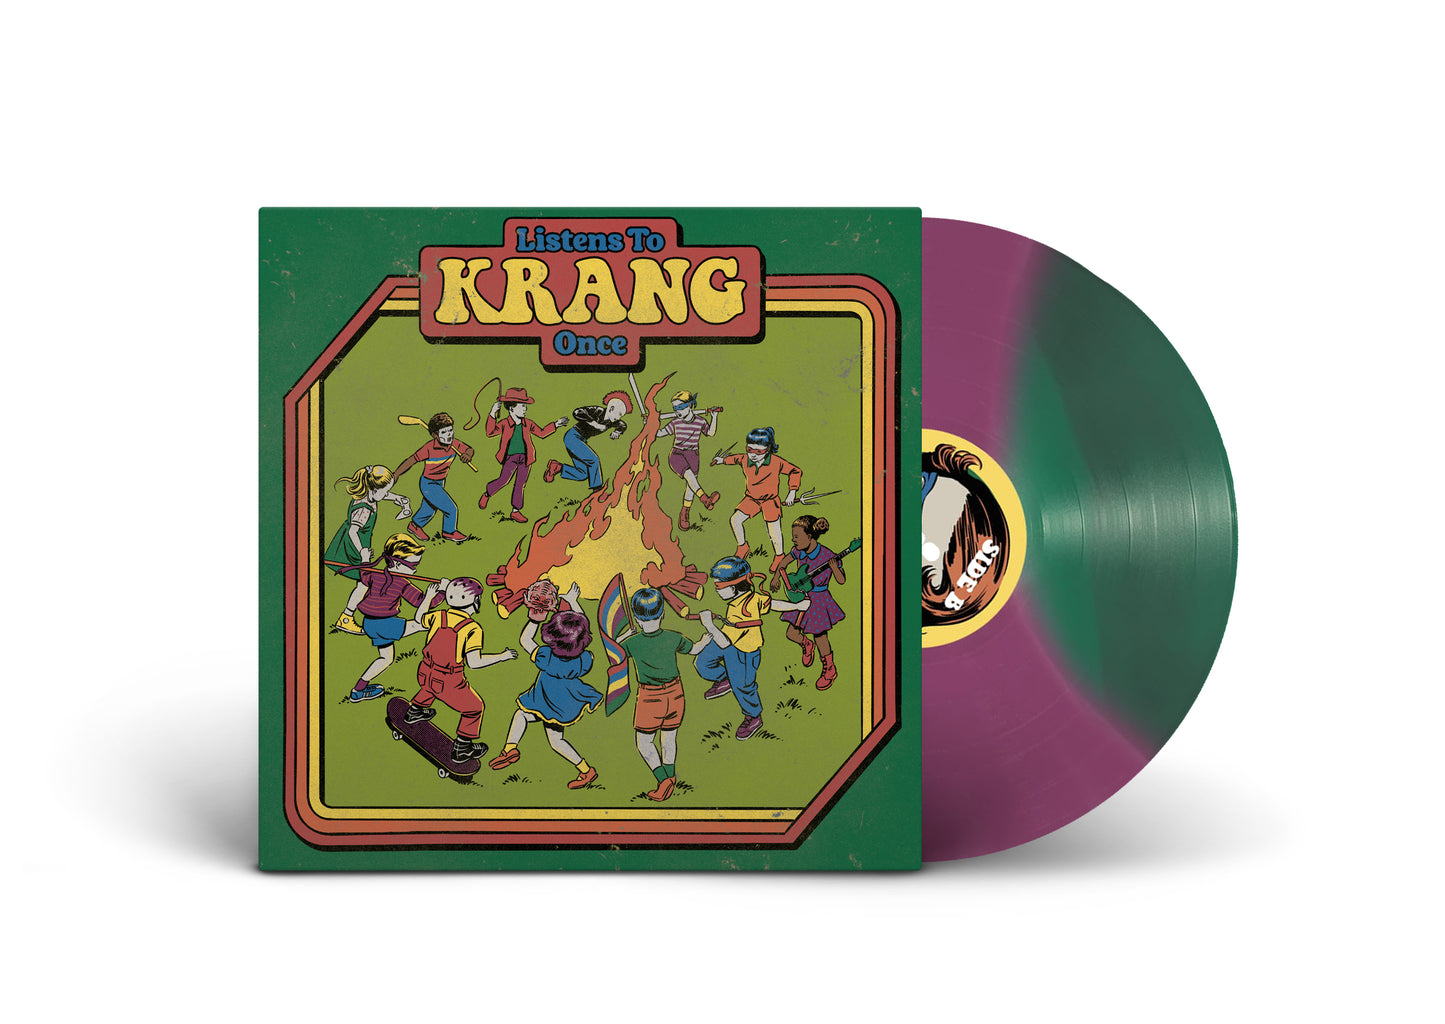 KRANG - "Listen To Krang Once" (SBAM) (LP)